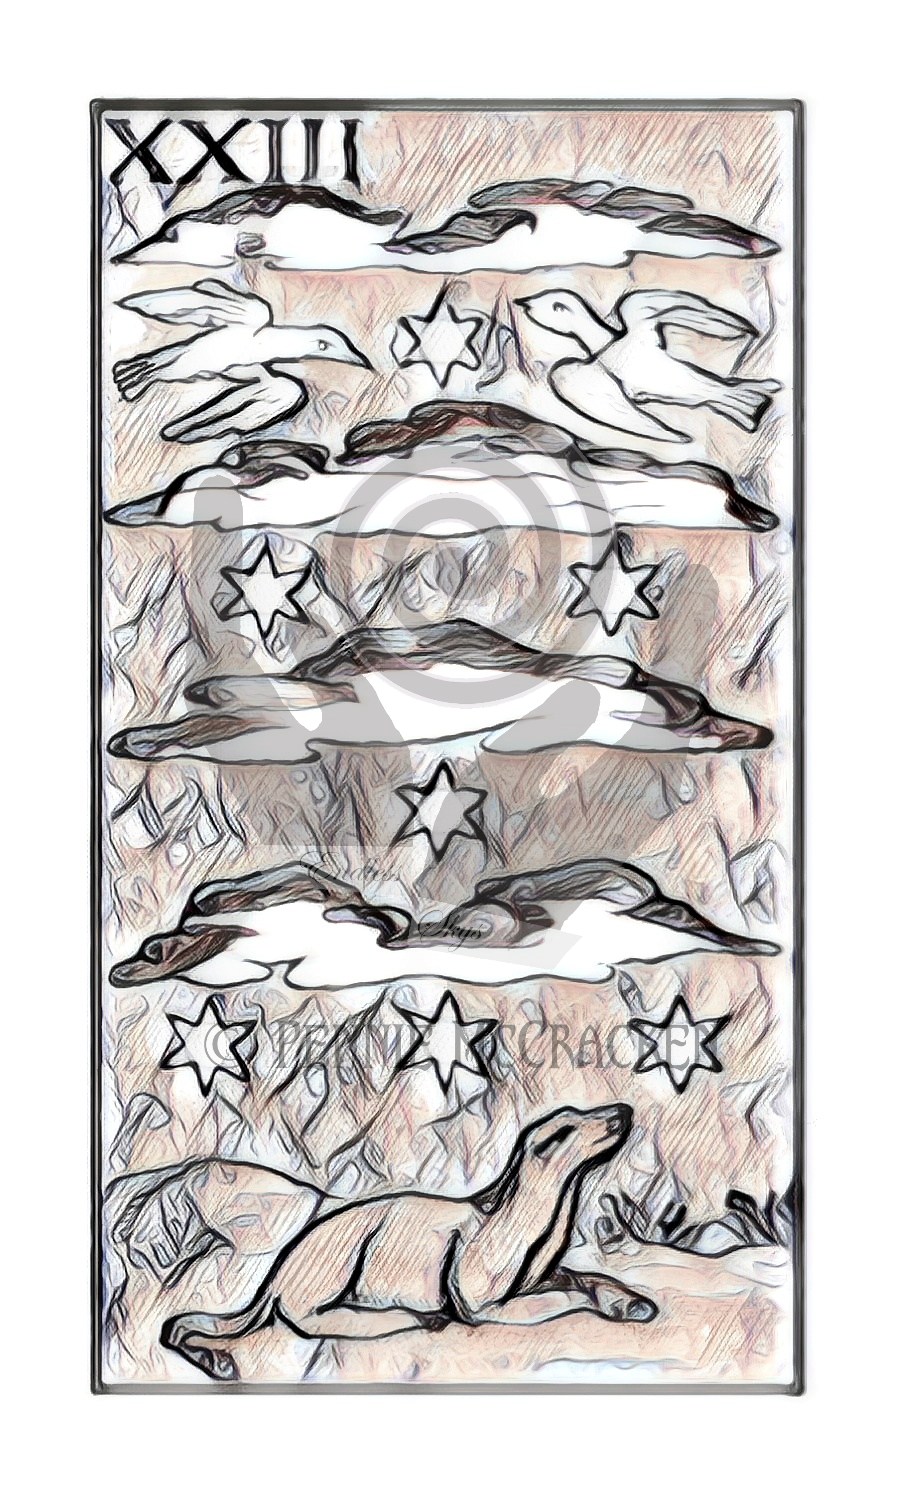 Minchiate Fiorentine Tarot Deck in Sketch Style by Pennie McCracken - Endless Skys